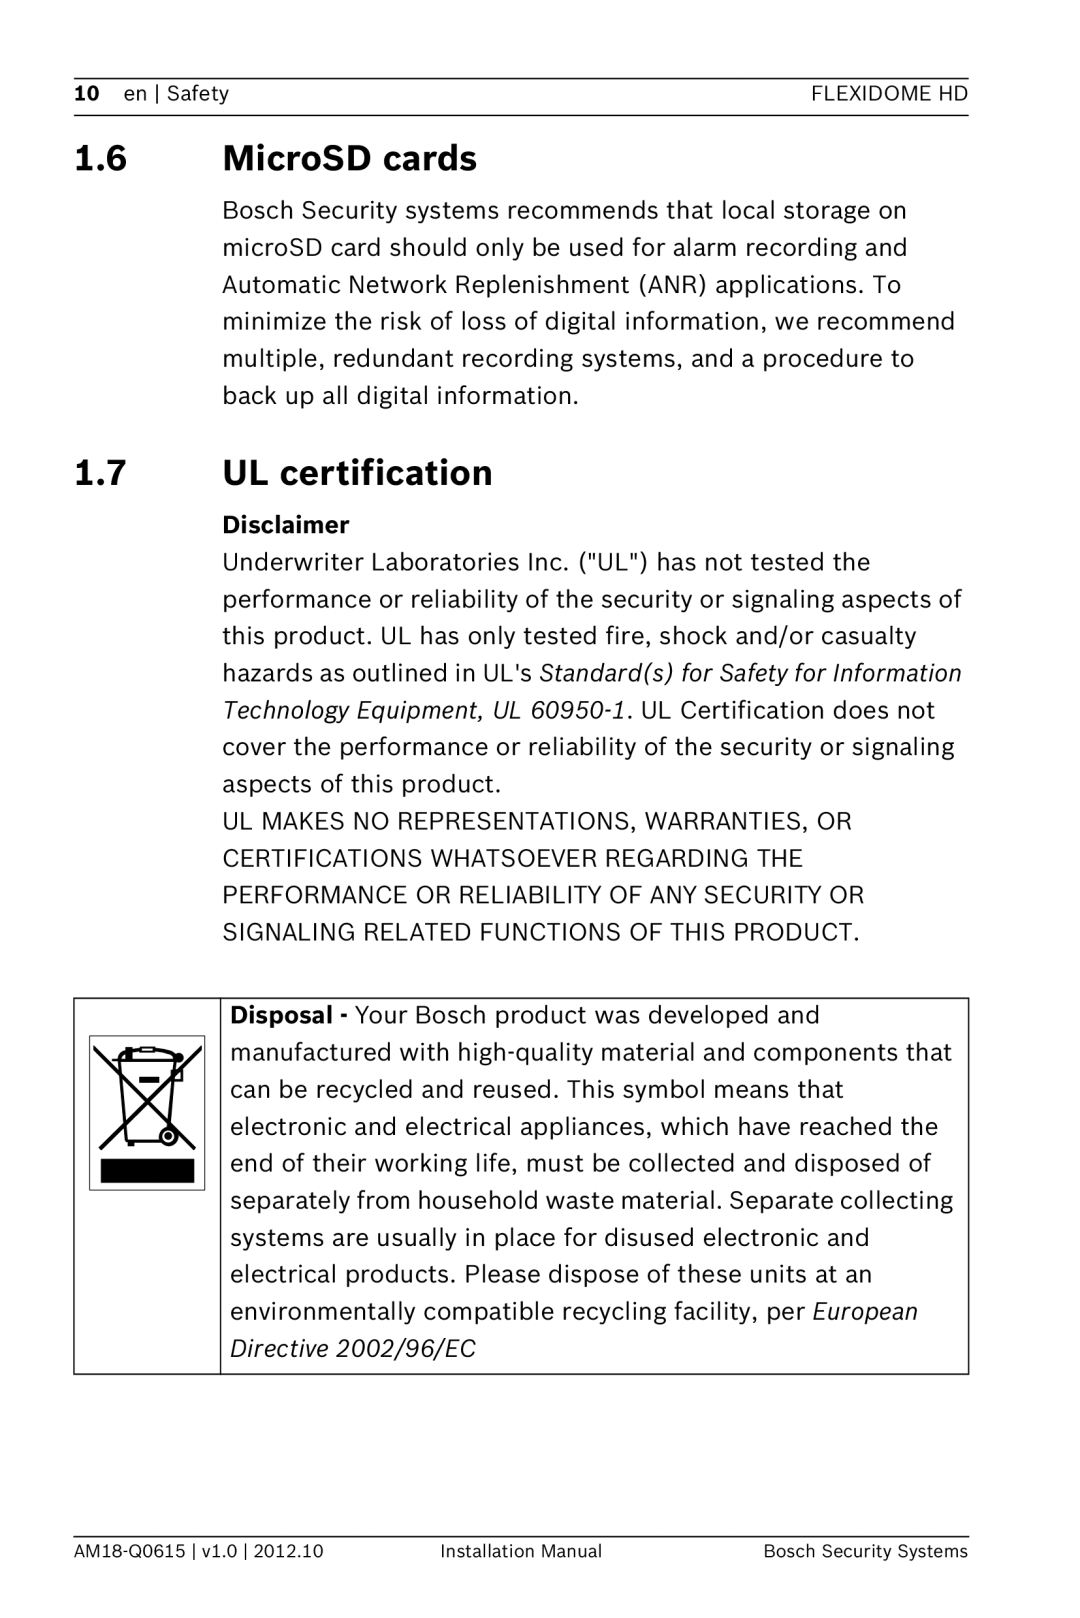 Bosch Appliances NDN-733 installation manual 1.6MicroSD cards, 1.7UL certification, Disclaimer 